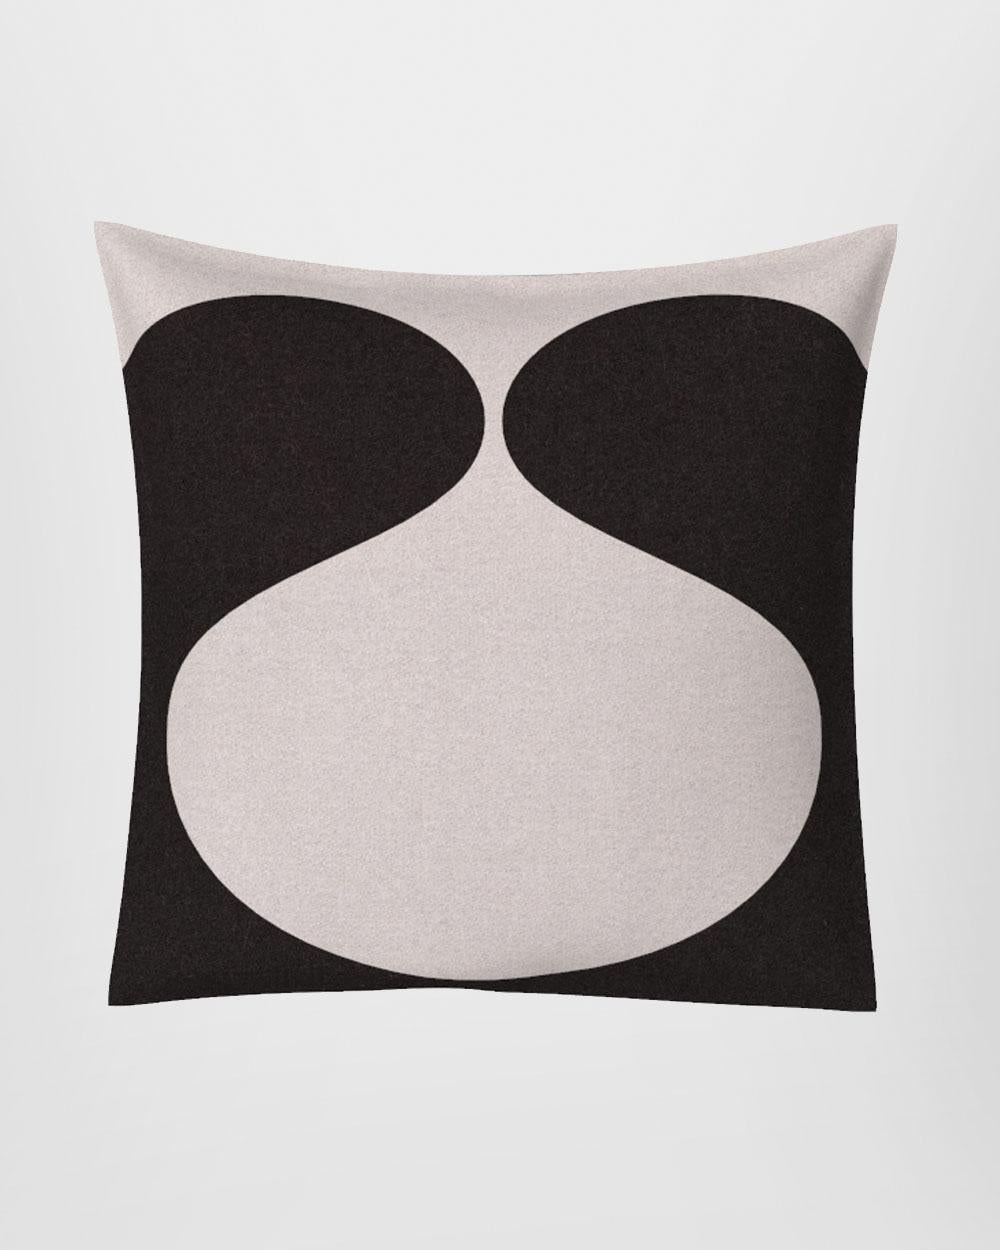 Austrian Gebrüder Thonet Vienna Curved Cushions by Paola Pastorini For Sale